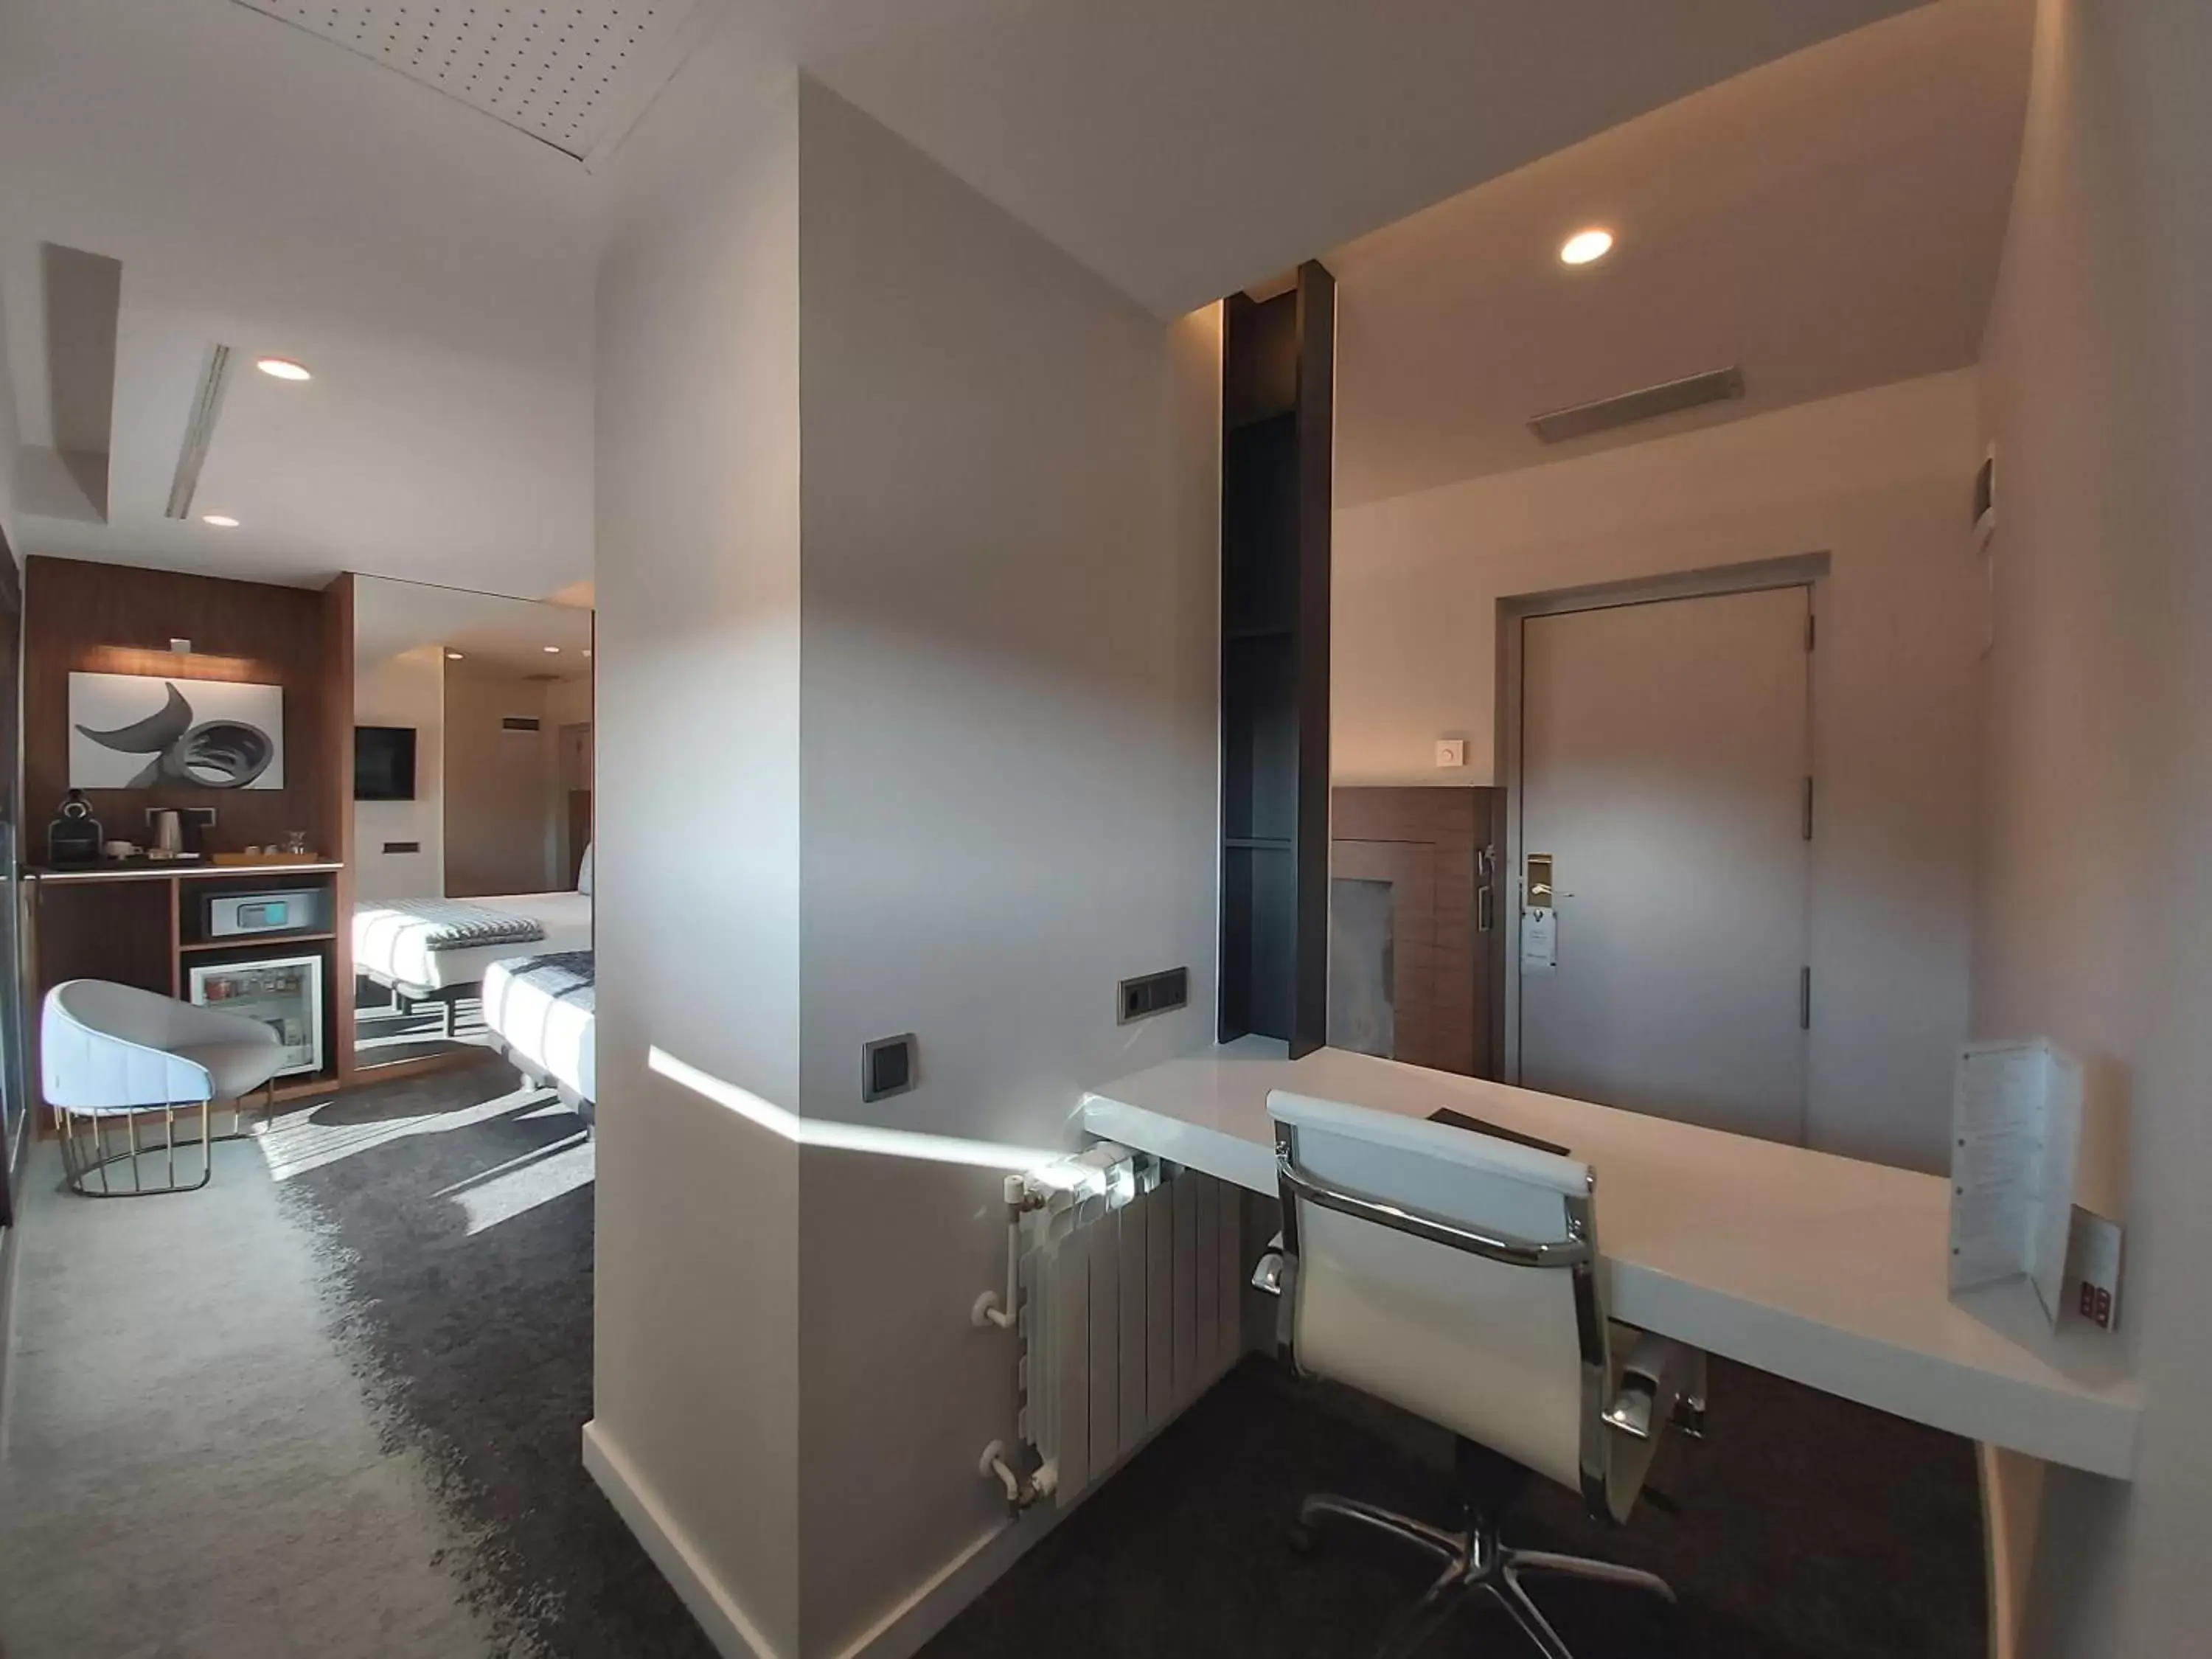 Photo of the whole room, Bathroom in Best Western Premier Hotel Dante